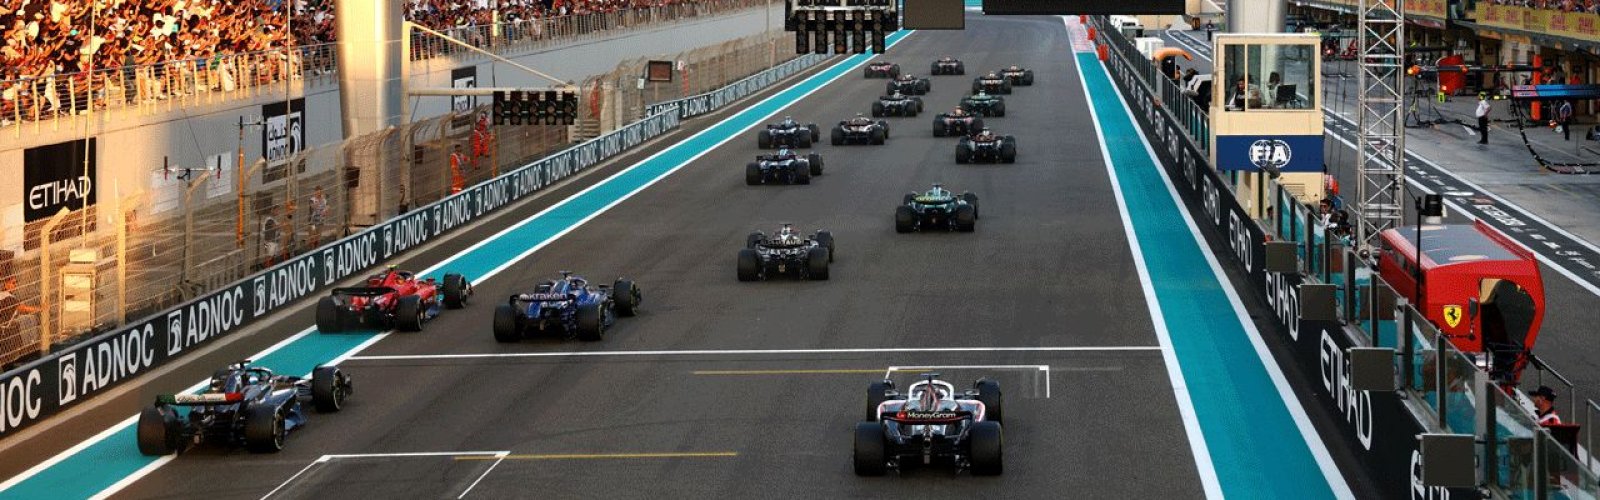 Abu Dhabi Formula 1 Grand Prix Ticket and travel package image